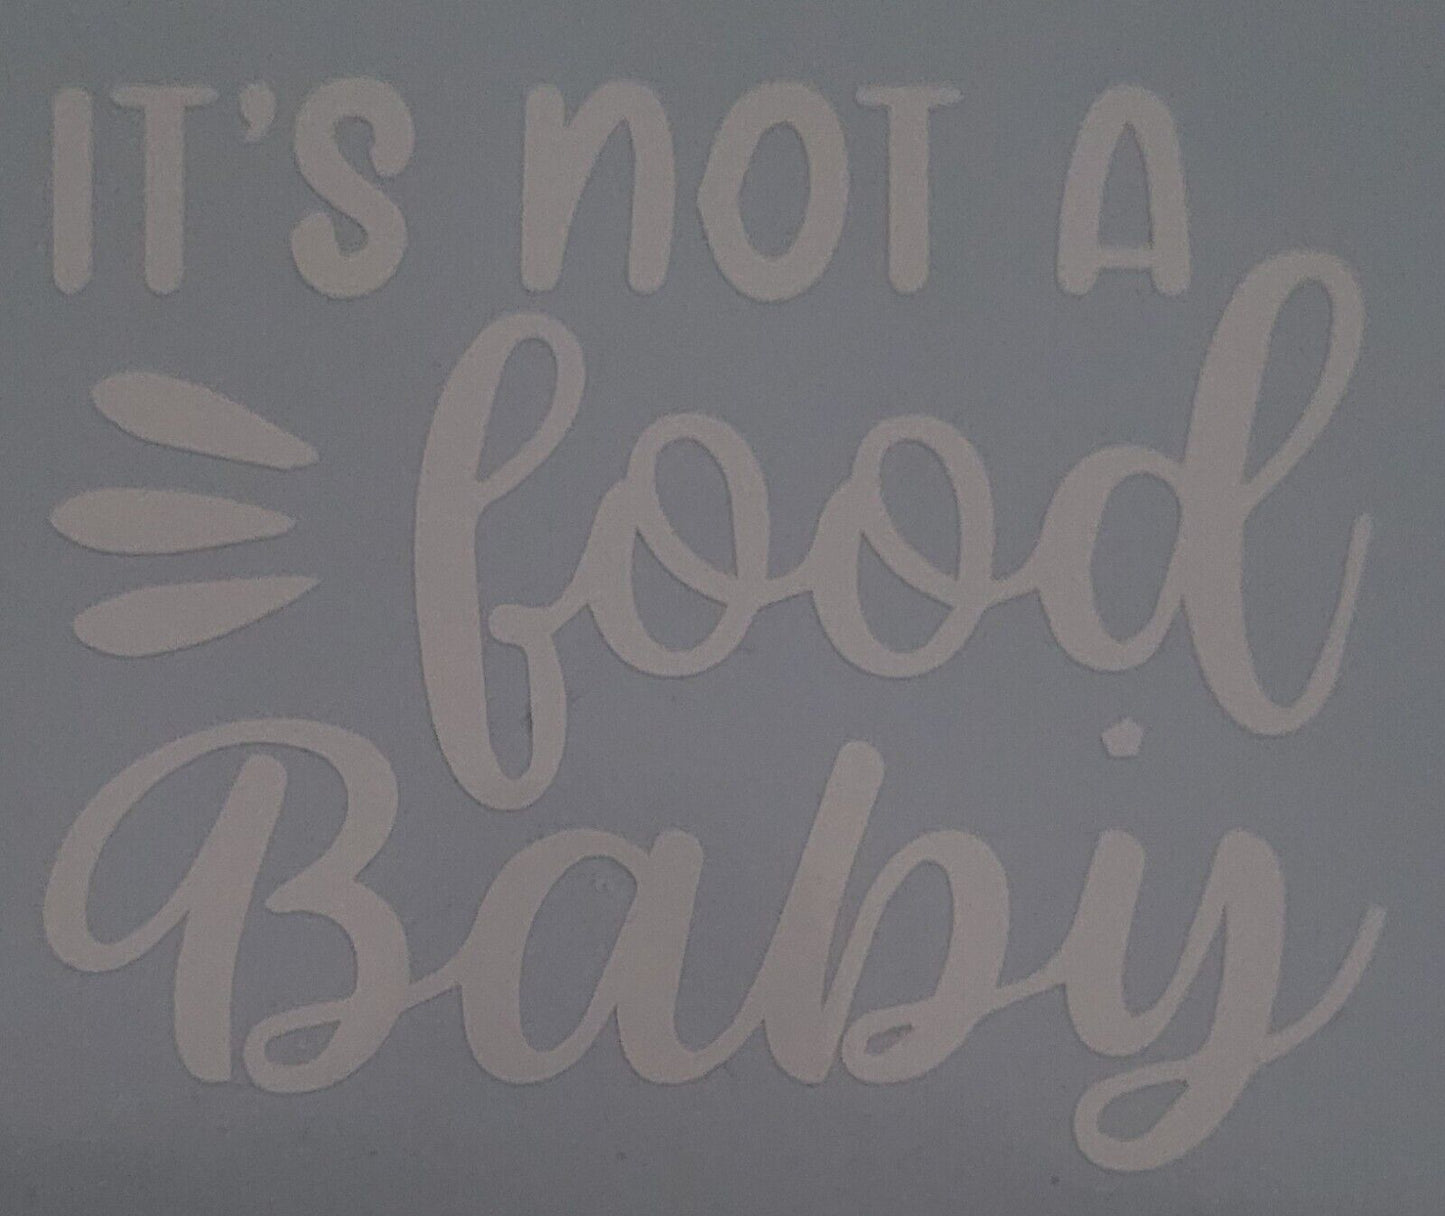 It's Not A Food Baby 10cm x 12cm Vinyl Sticker / decal Windows Automotive Marine